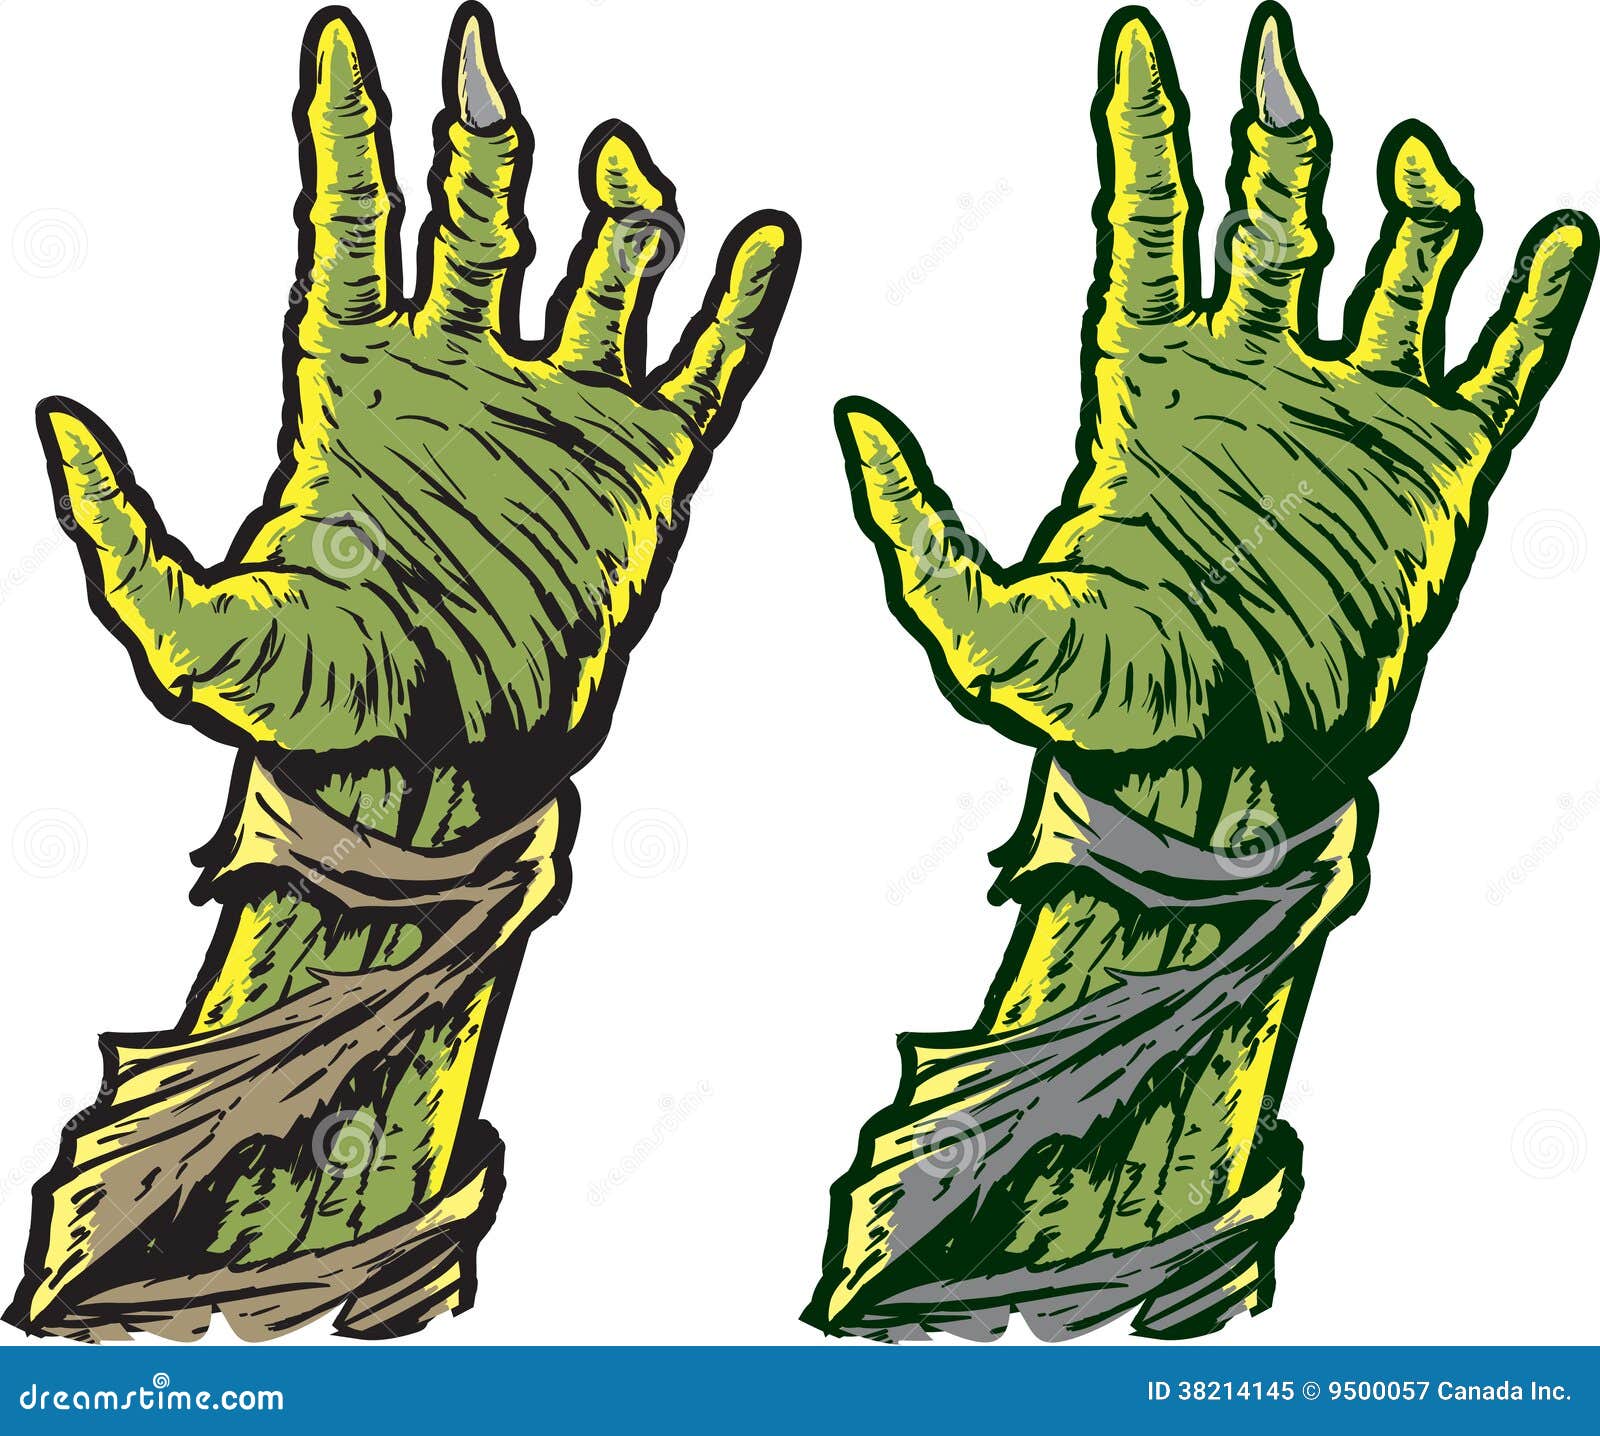 zombie hand clipart - photo #7